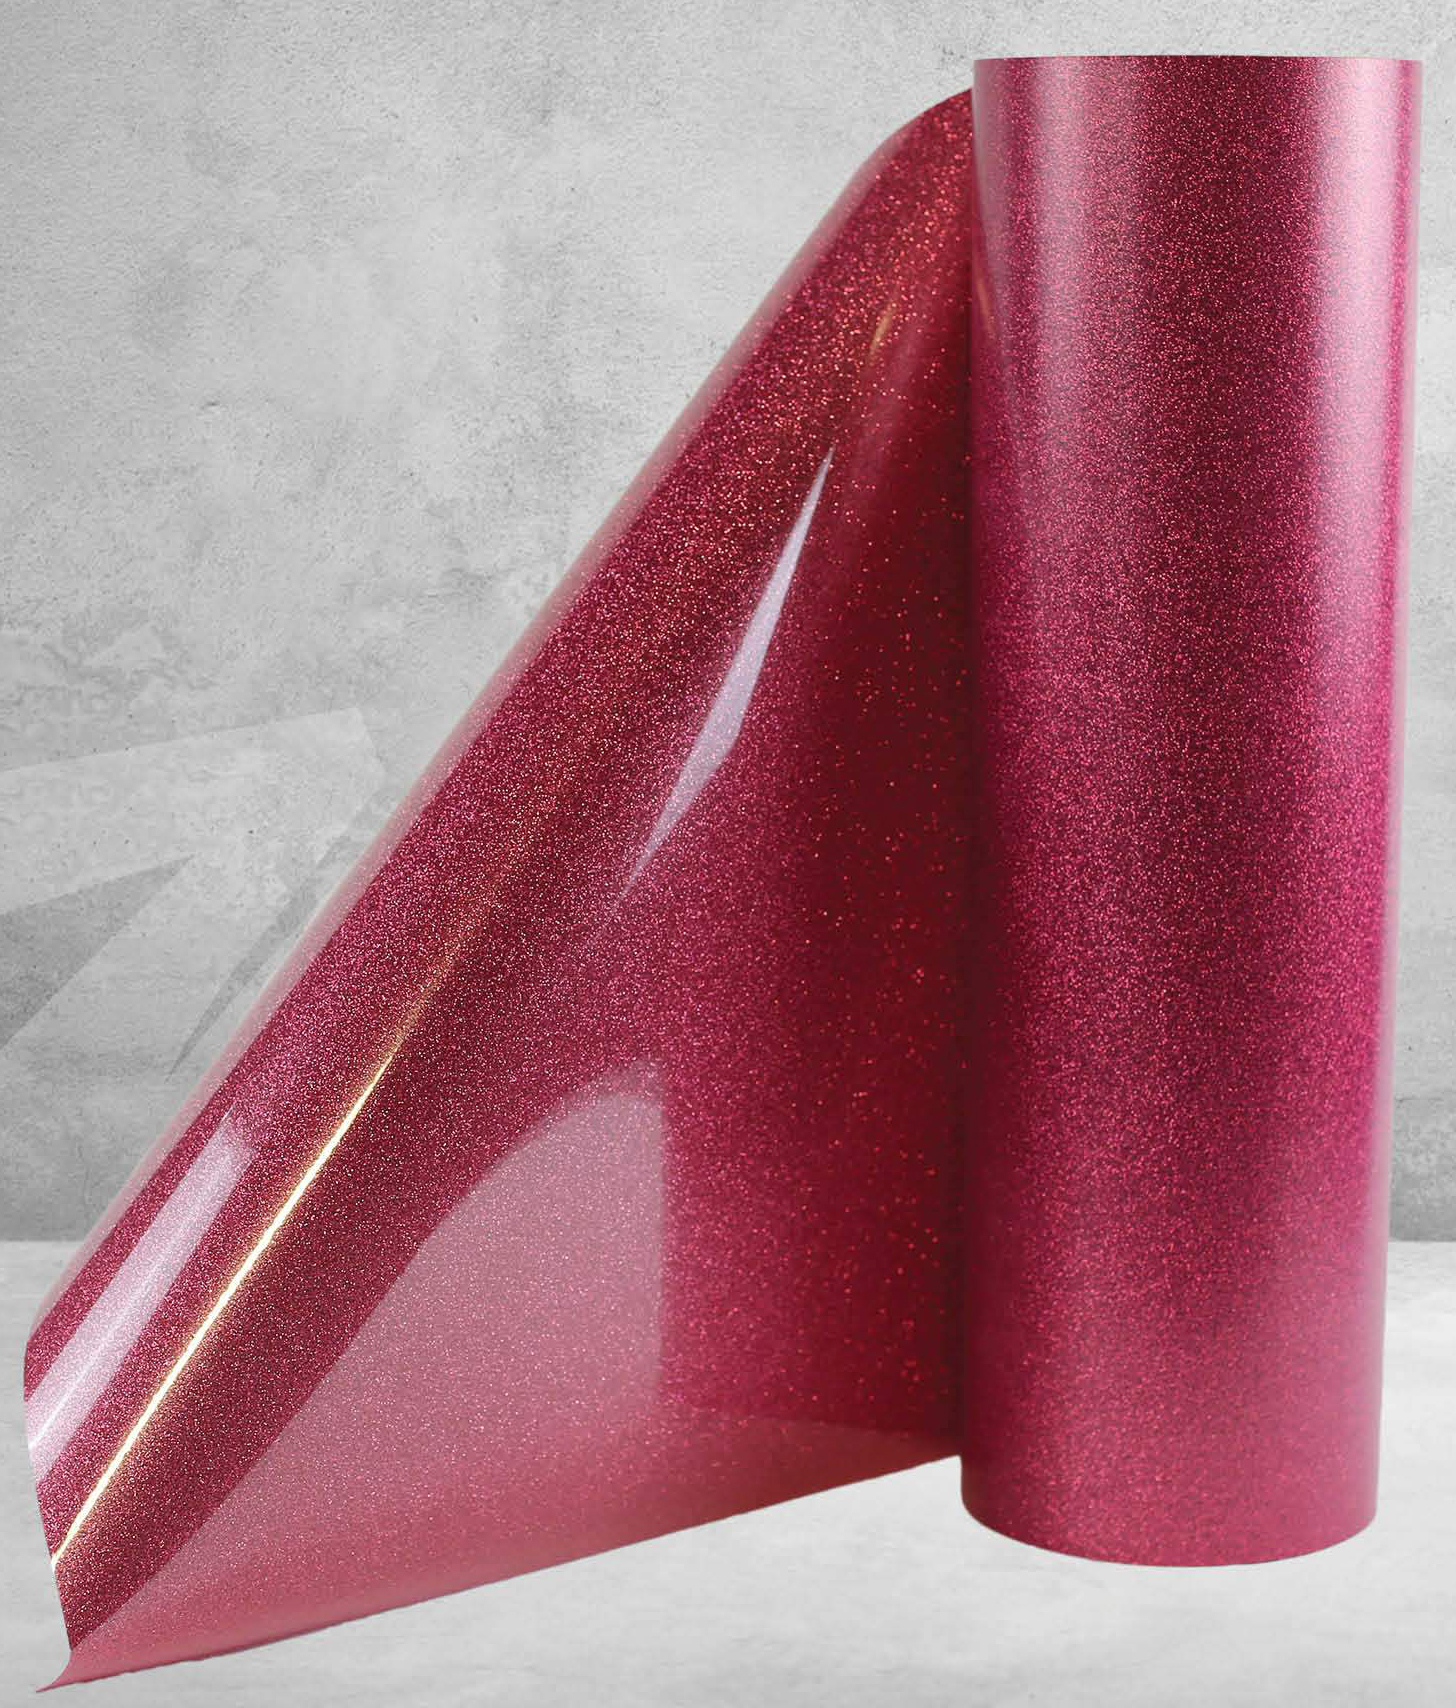 GlitterFlexULTRA Pink - Specialty Materials GlitterFlex Ultra Heat Transfer Film